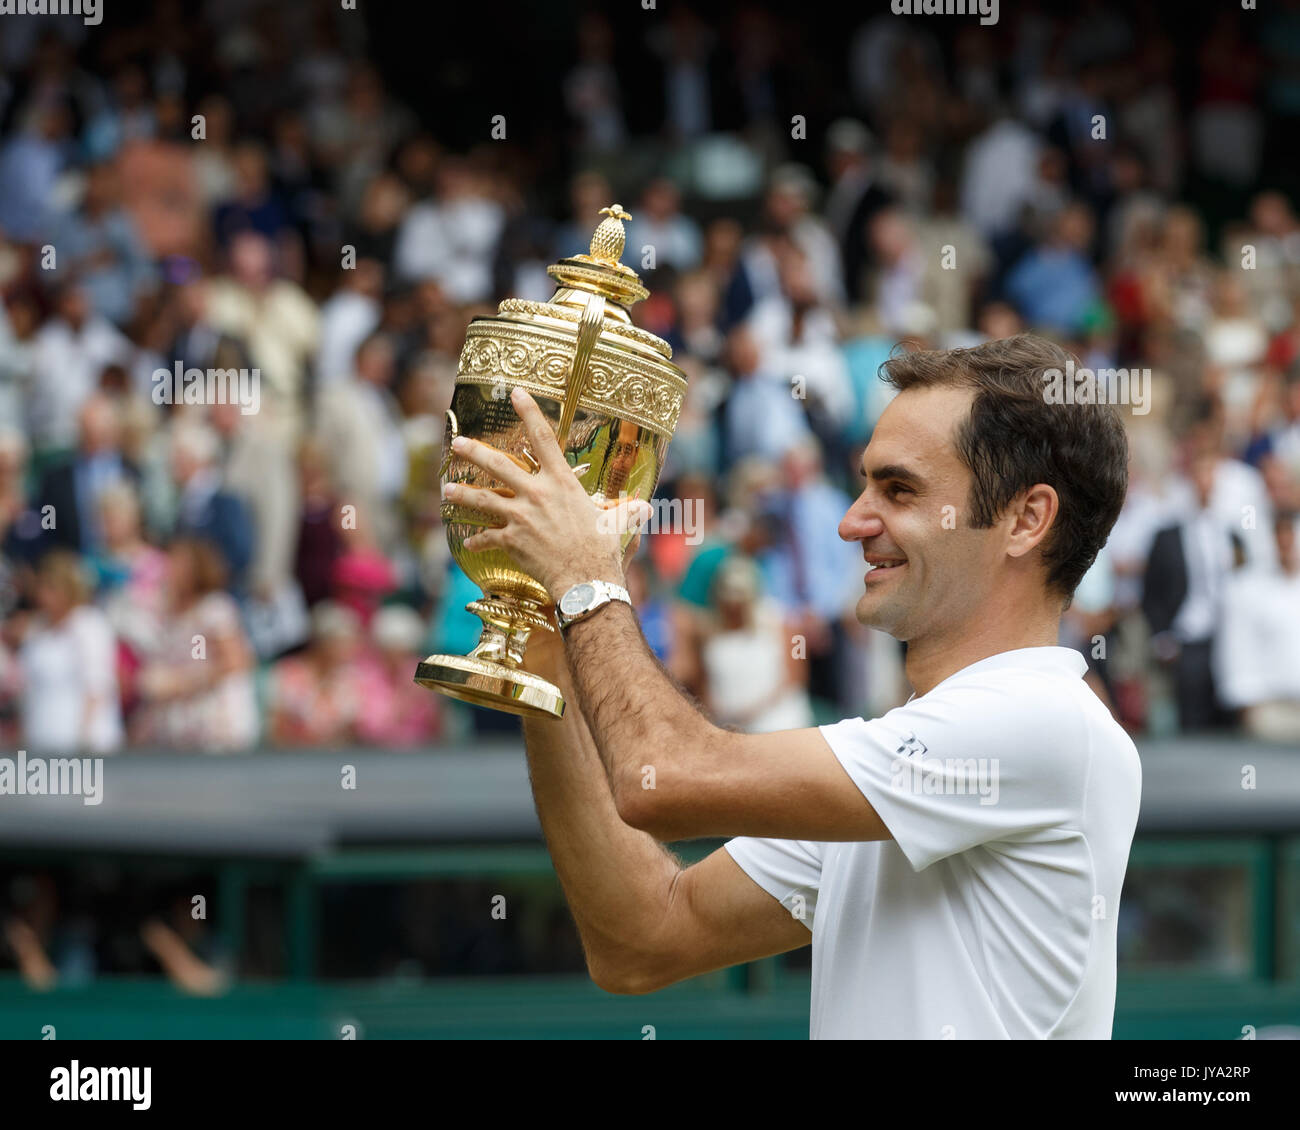 Roger Federer holding trophy after winning men's singles final match  at Wimbledon Tennis Championships 2017, London Stock Photo